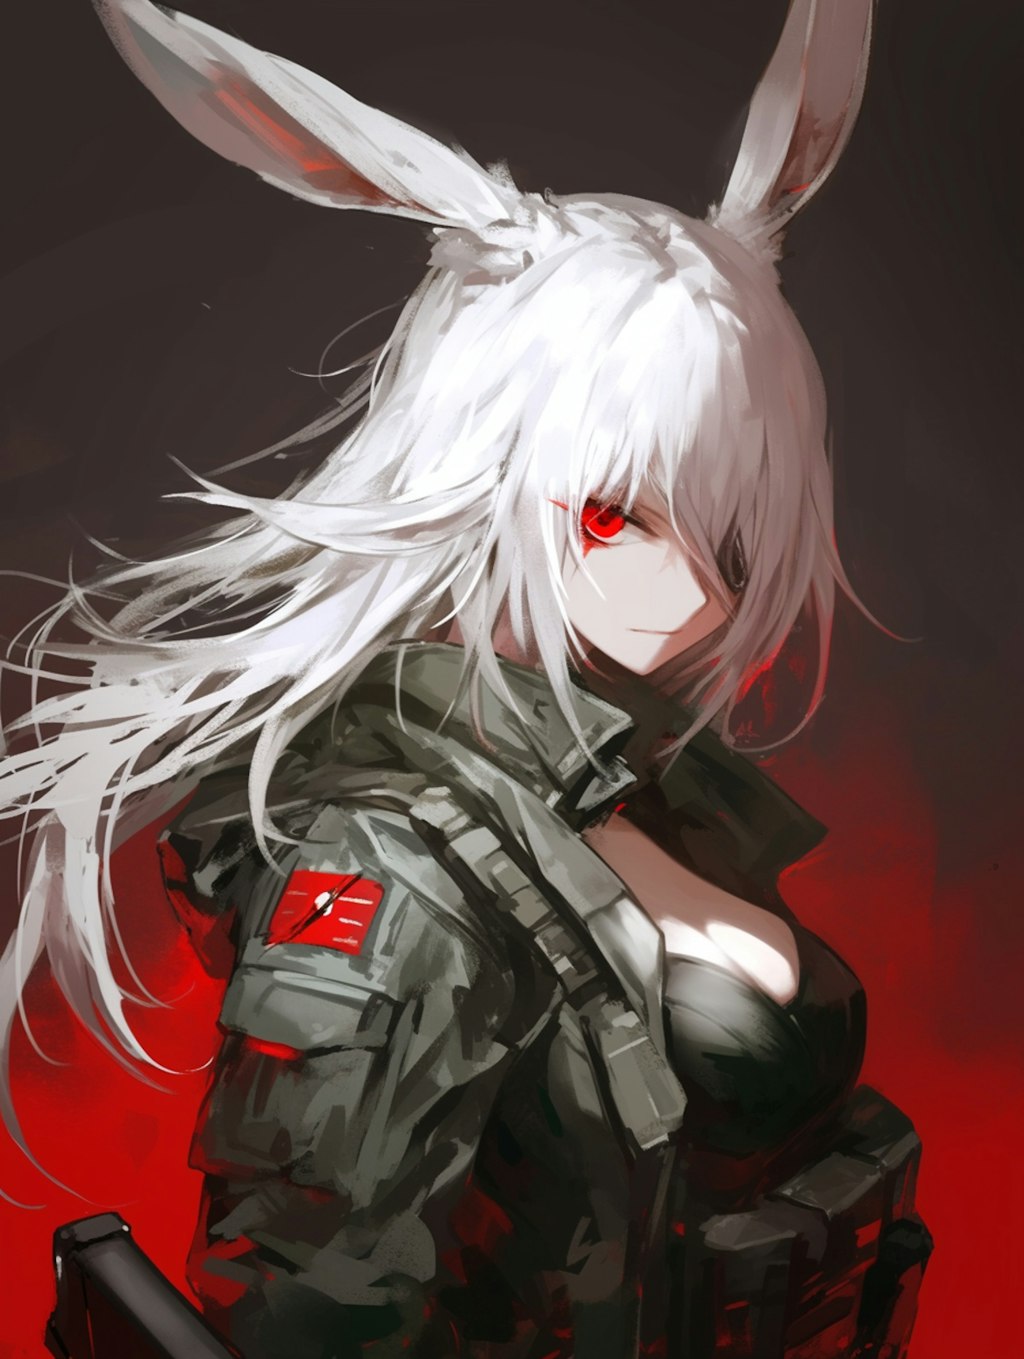 Rabbit soldiers